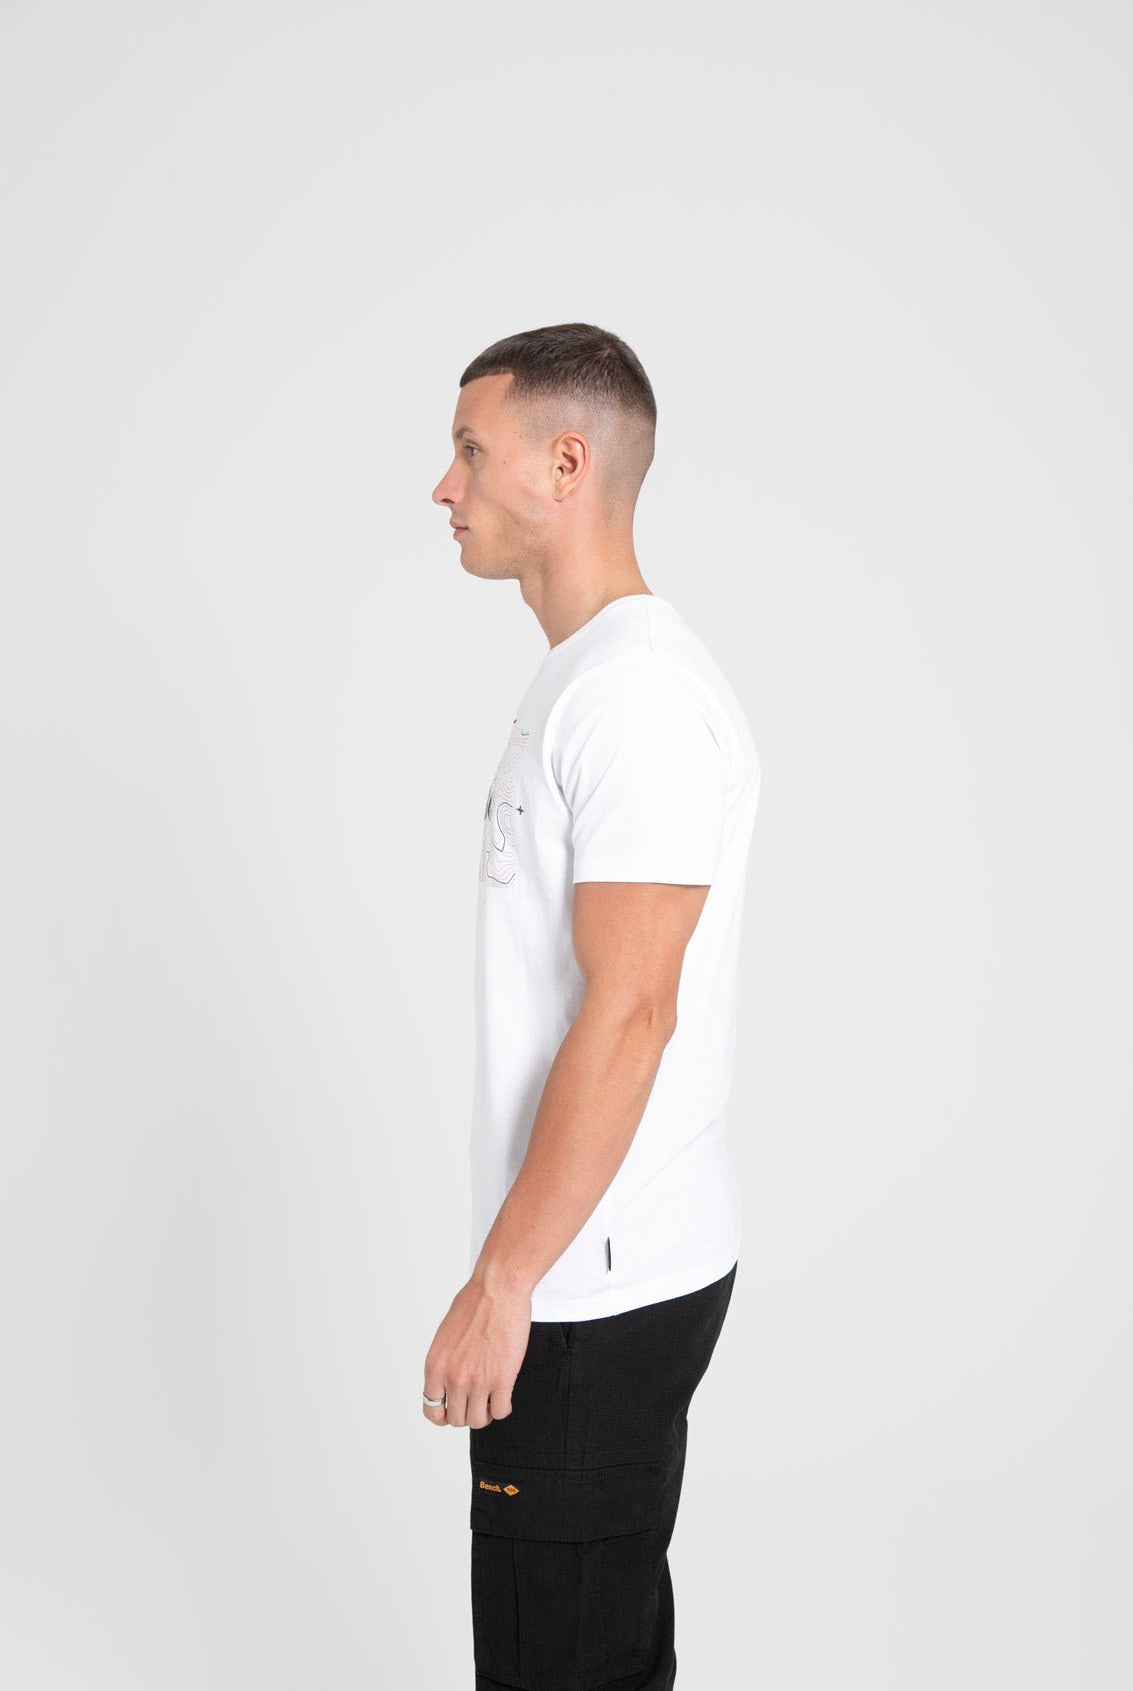 Mens 'HAWES' T-Shirt - WHITE - Shop at www.Bench.co.uk #LoveMyHood